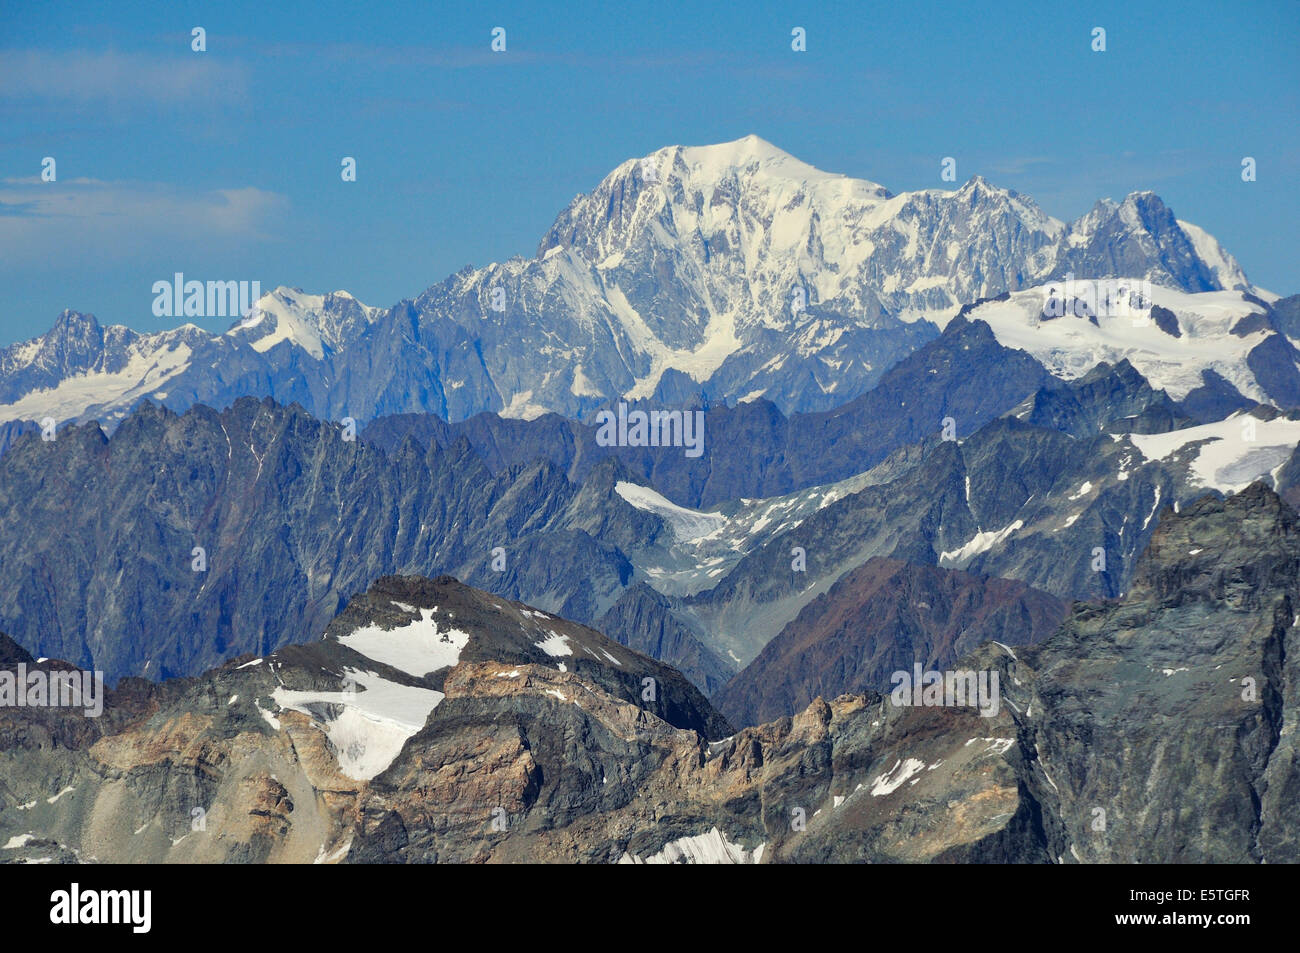 The highest peak of the Alps, Mont Blanc, 4808 m, seen from the Klein Matterhorn, Zermatt, Canton of Valais, Switzerland Stock Photo